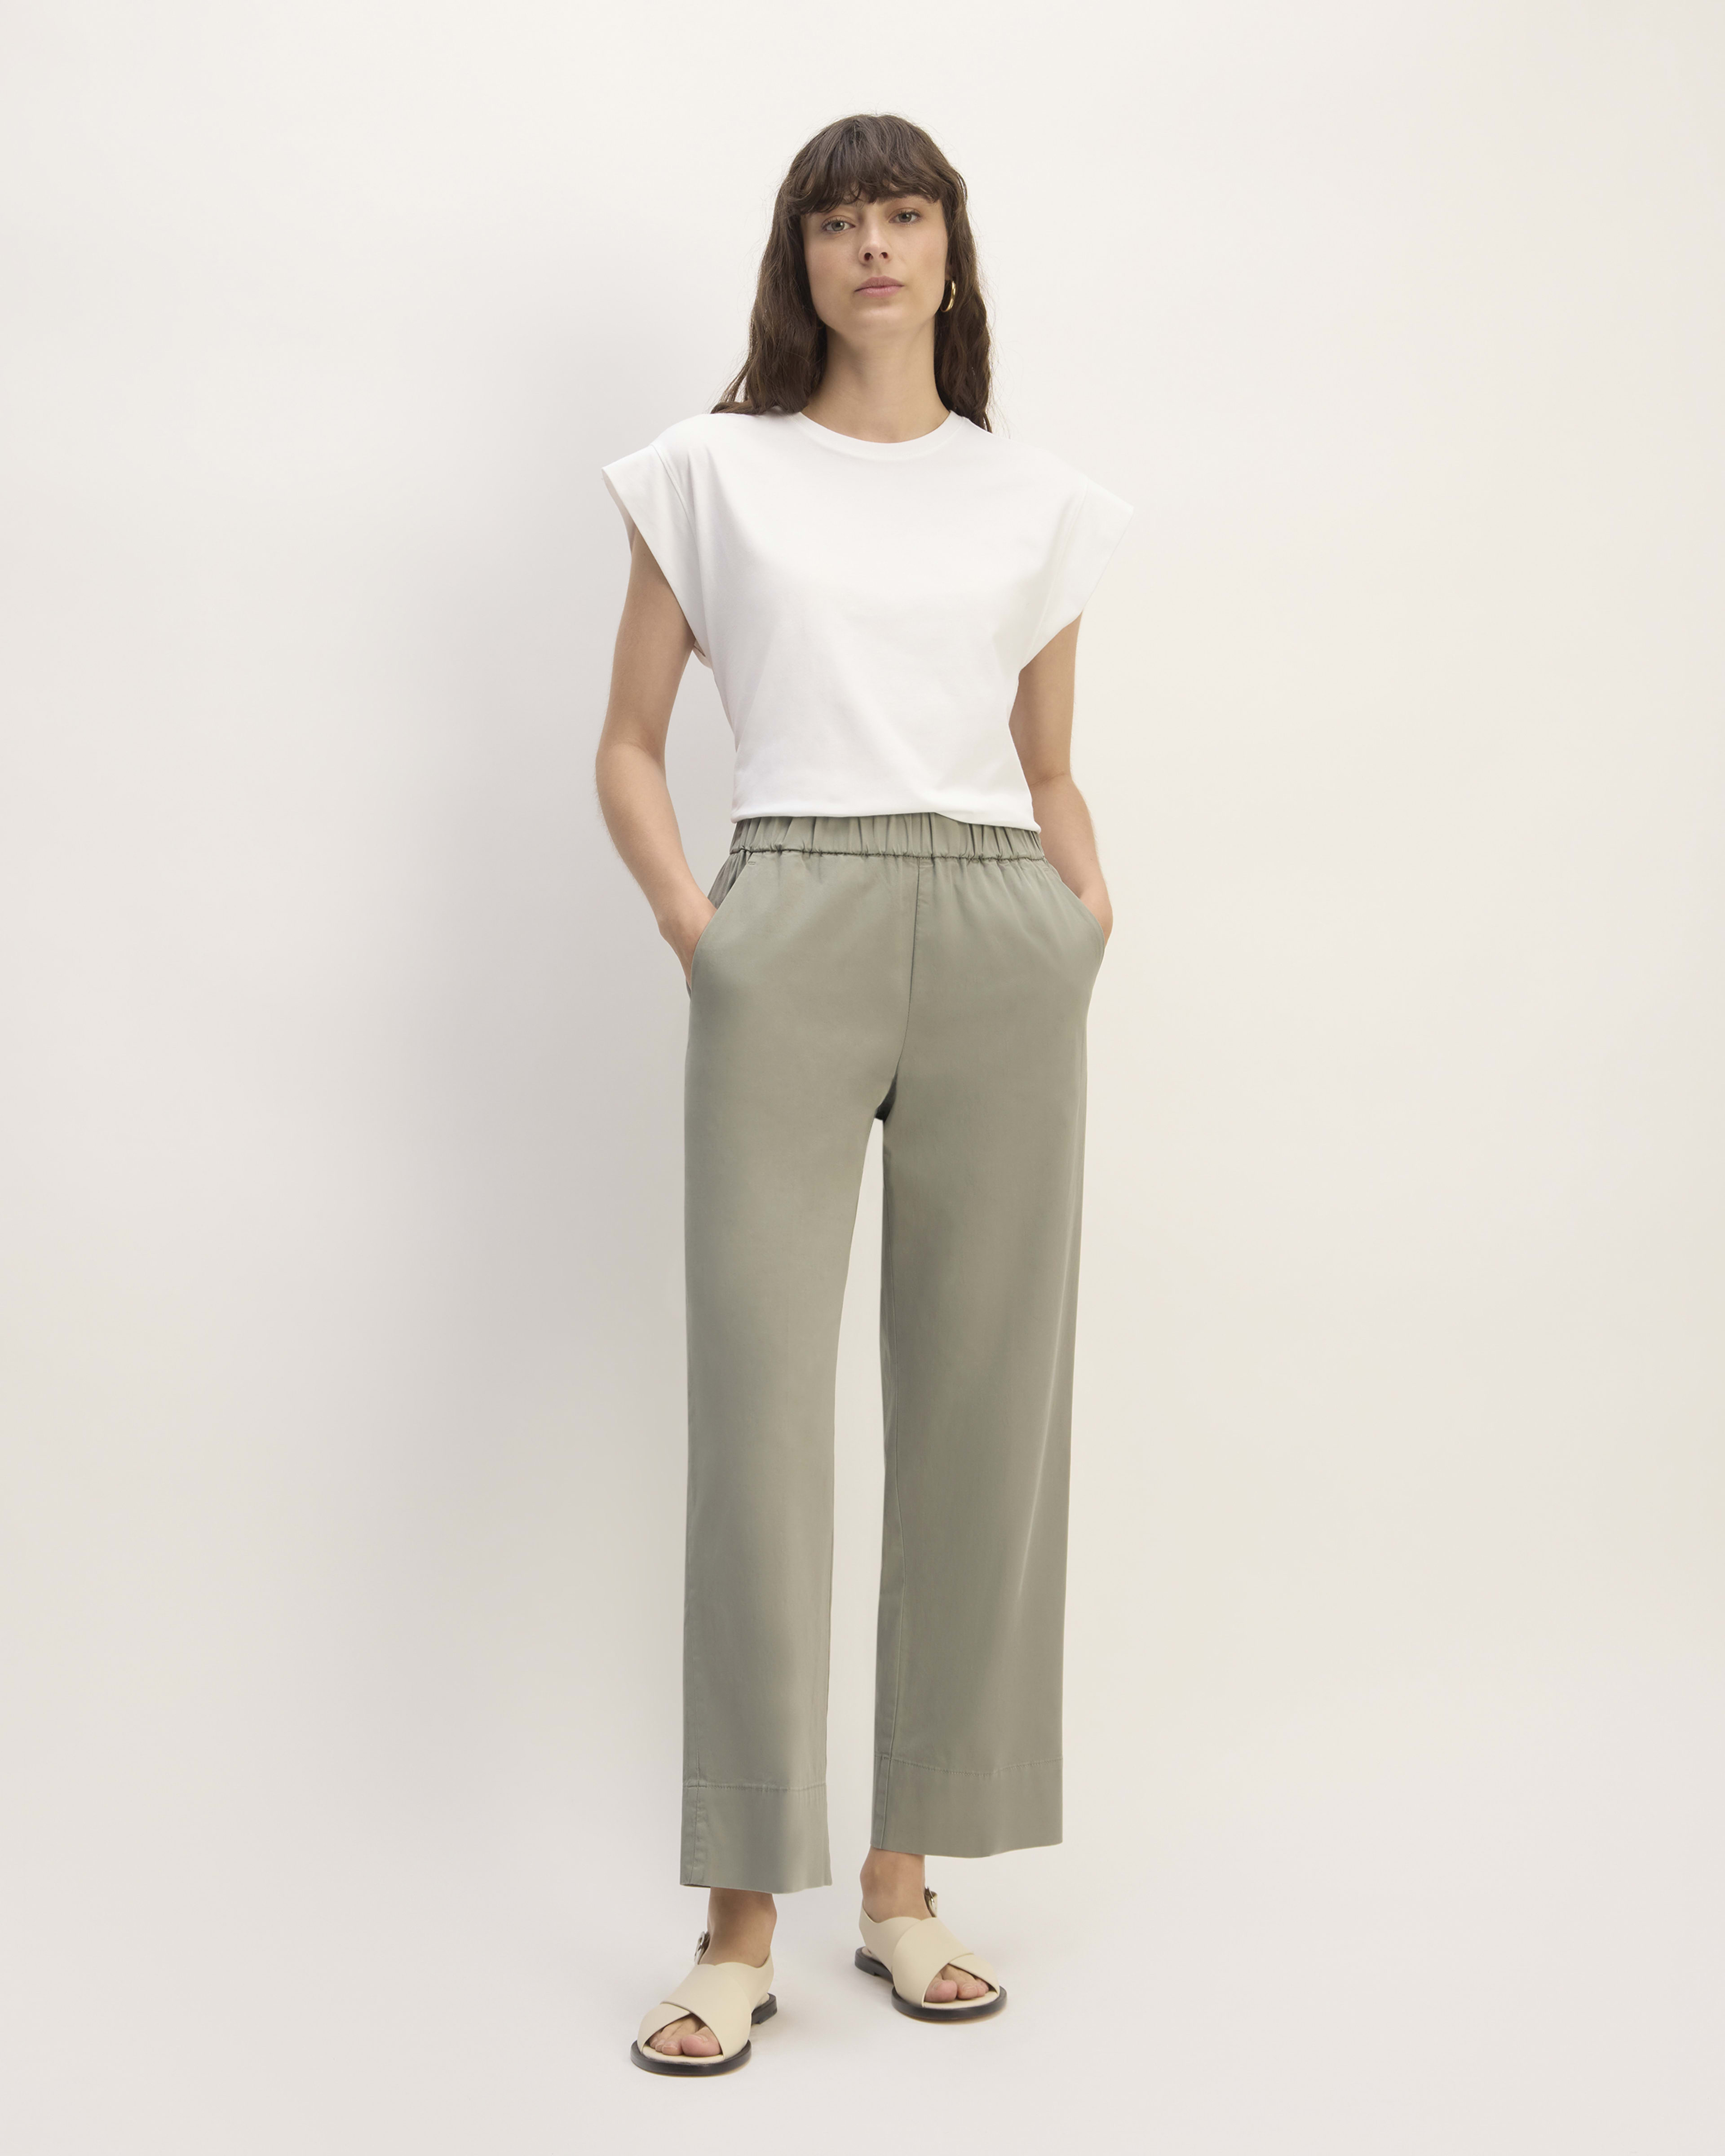 Capri Pants for Women Linen Wide Leg Elastic Waist Casual Lounge Cotton  Pants with Pockets Khaki S at  Women's Clothing store